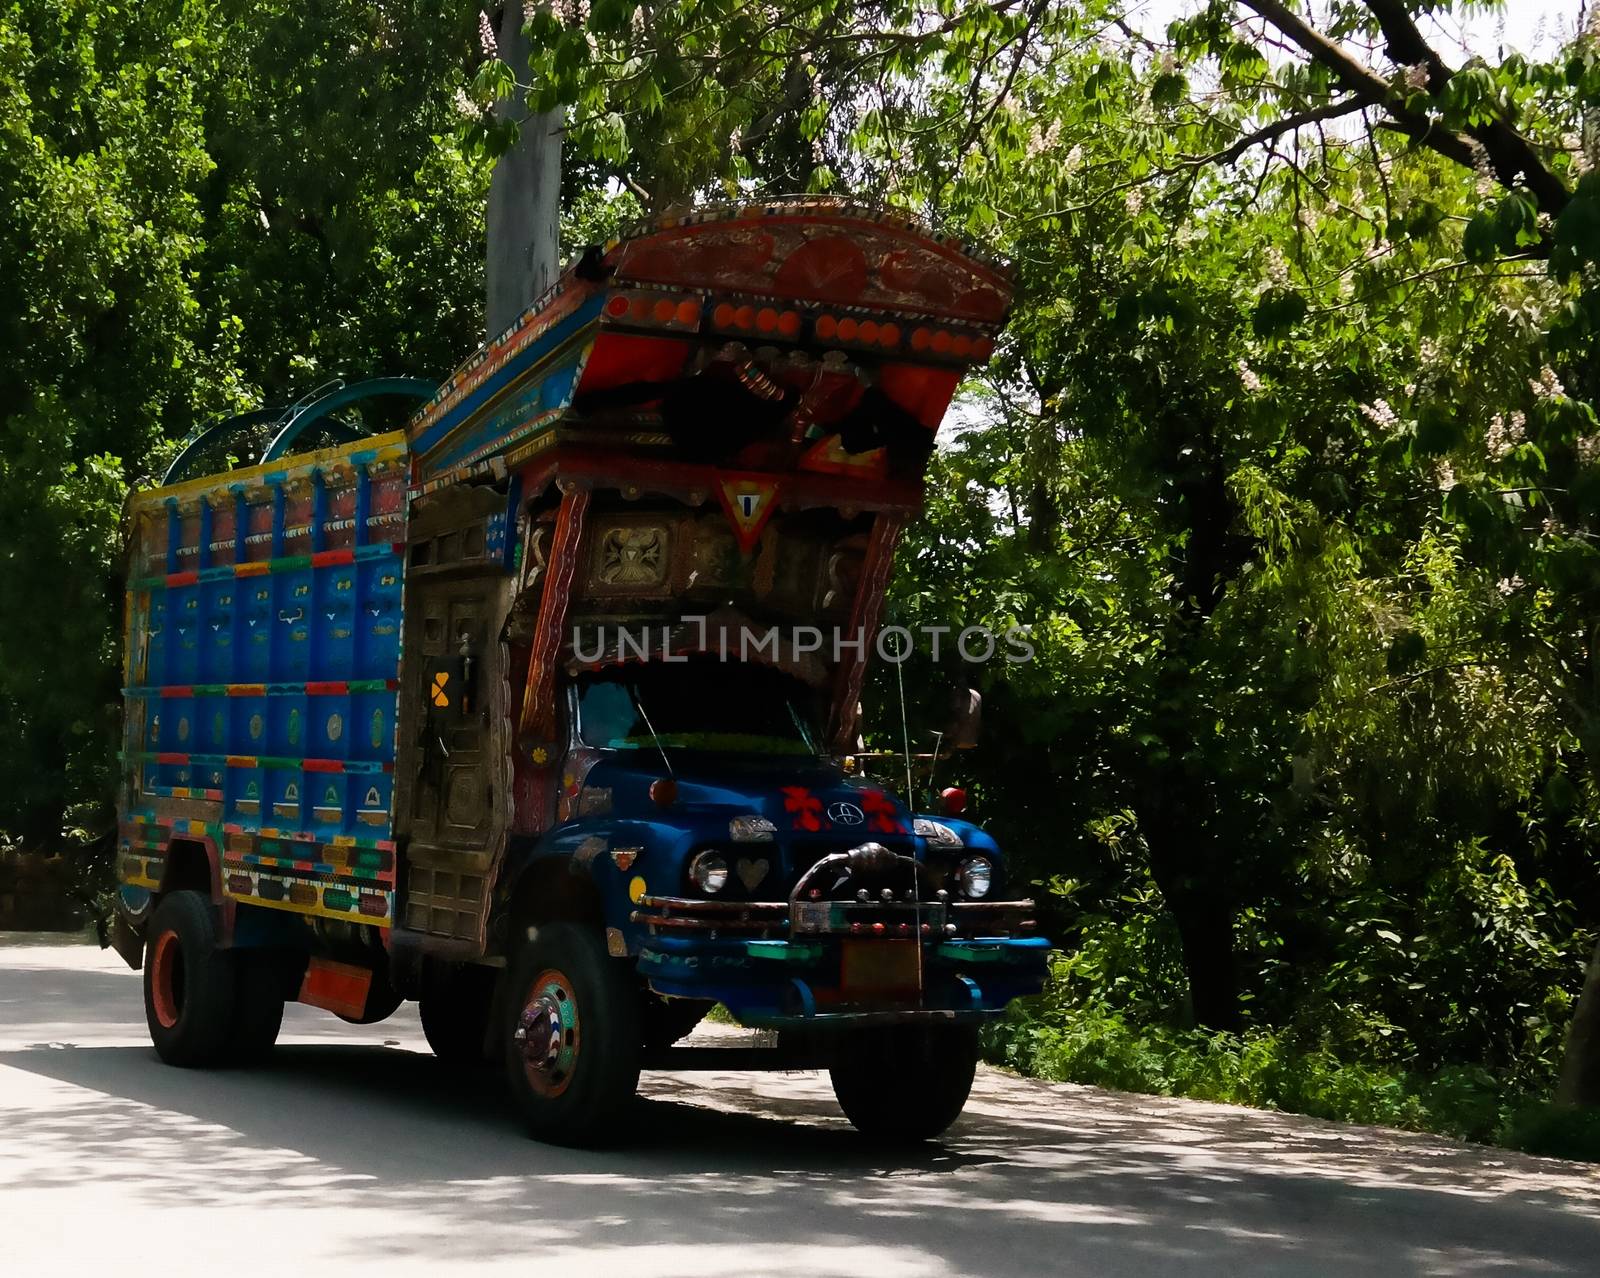 Decorated truck on the Karakoram highway, Pakistan by homocosmicos